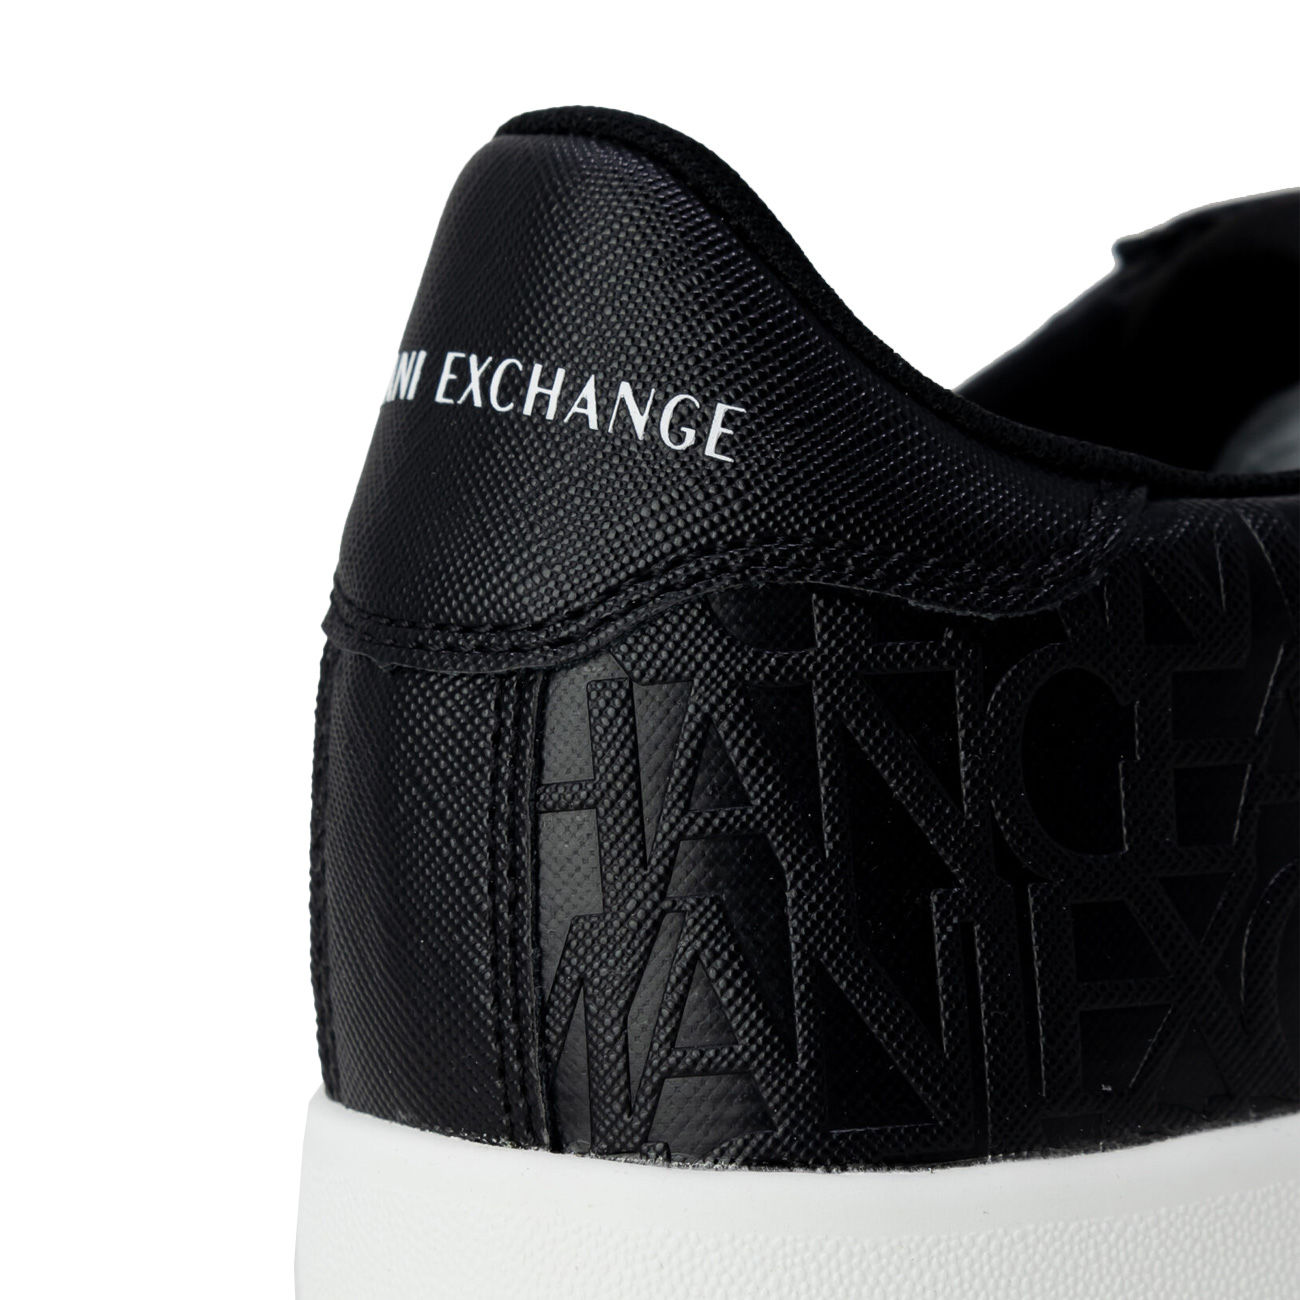 Armani Exchange Large Logo Suede Mix Sneakers In Black - Black | ModeSens |  Armani flip flops, Armani exchange men, Armani exchange